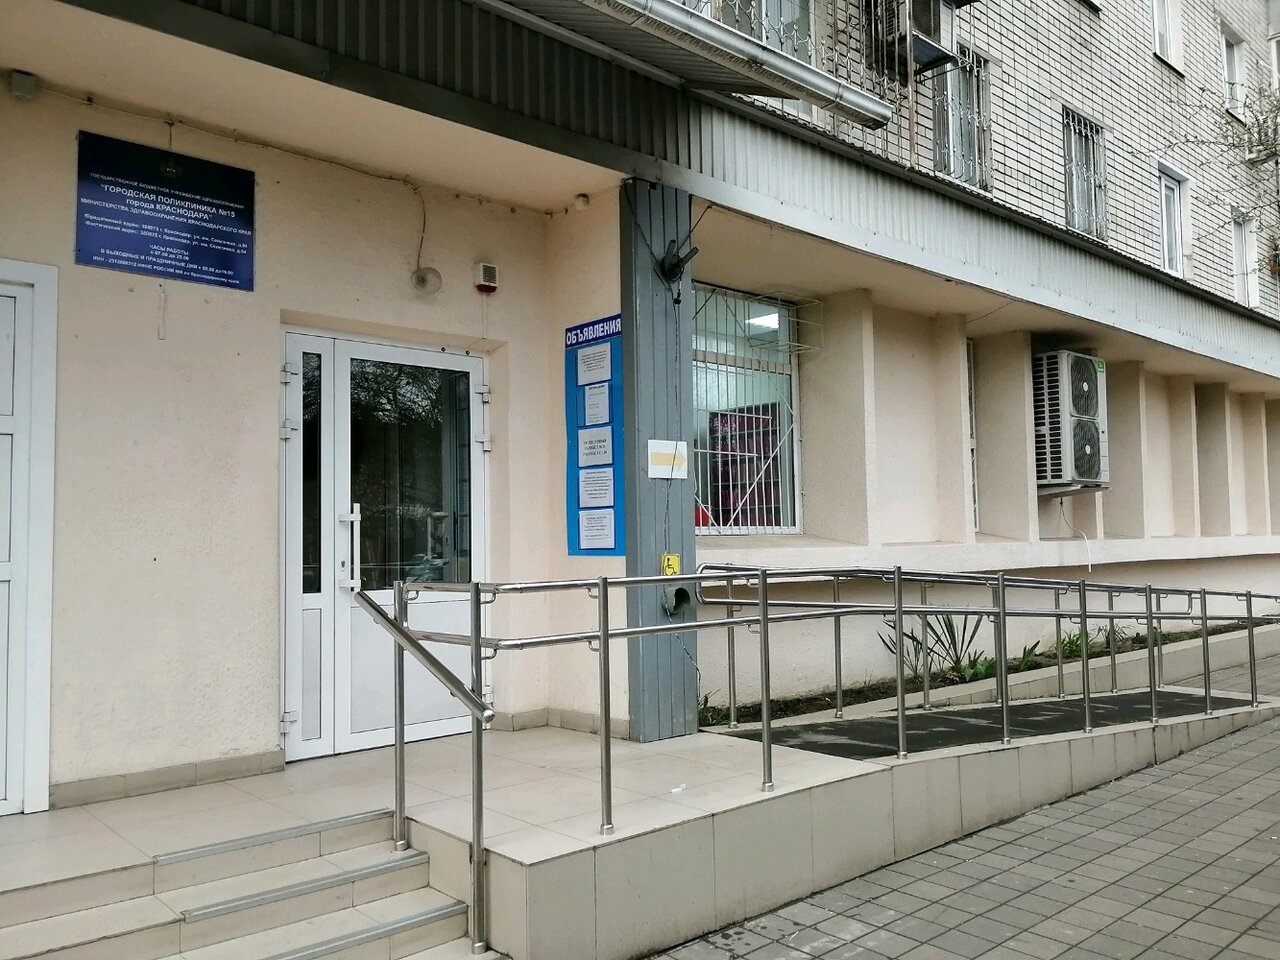 Поликлиника 94 ф1. Краснодар Селезнева 94 год постройки. 9 поликлиника краснодар телефон